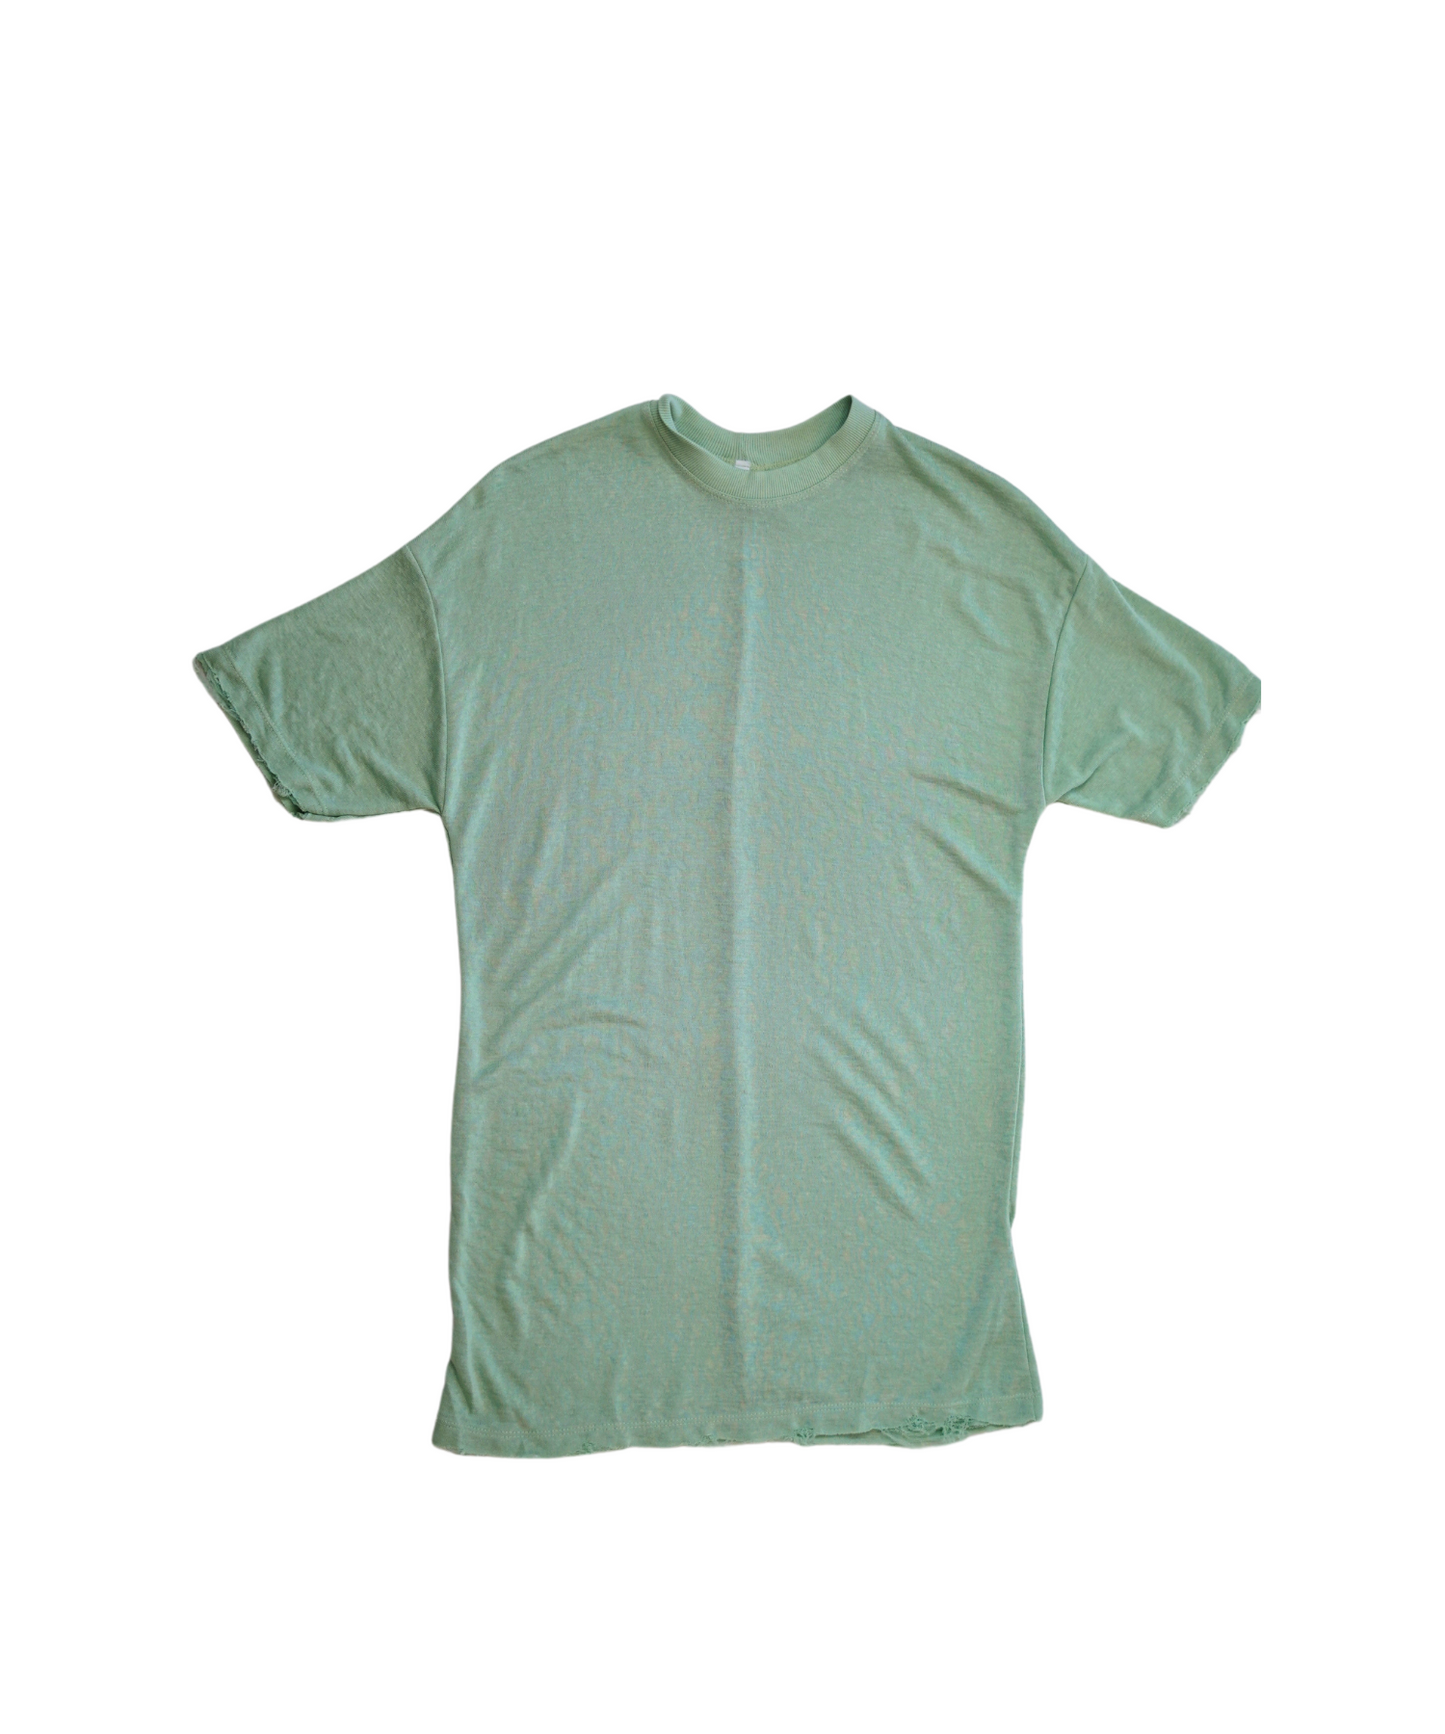 Artchimia basic resort shirt